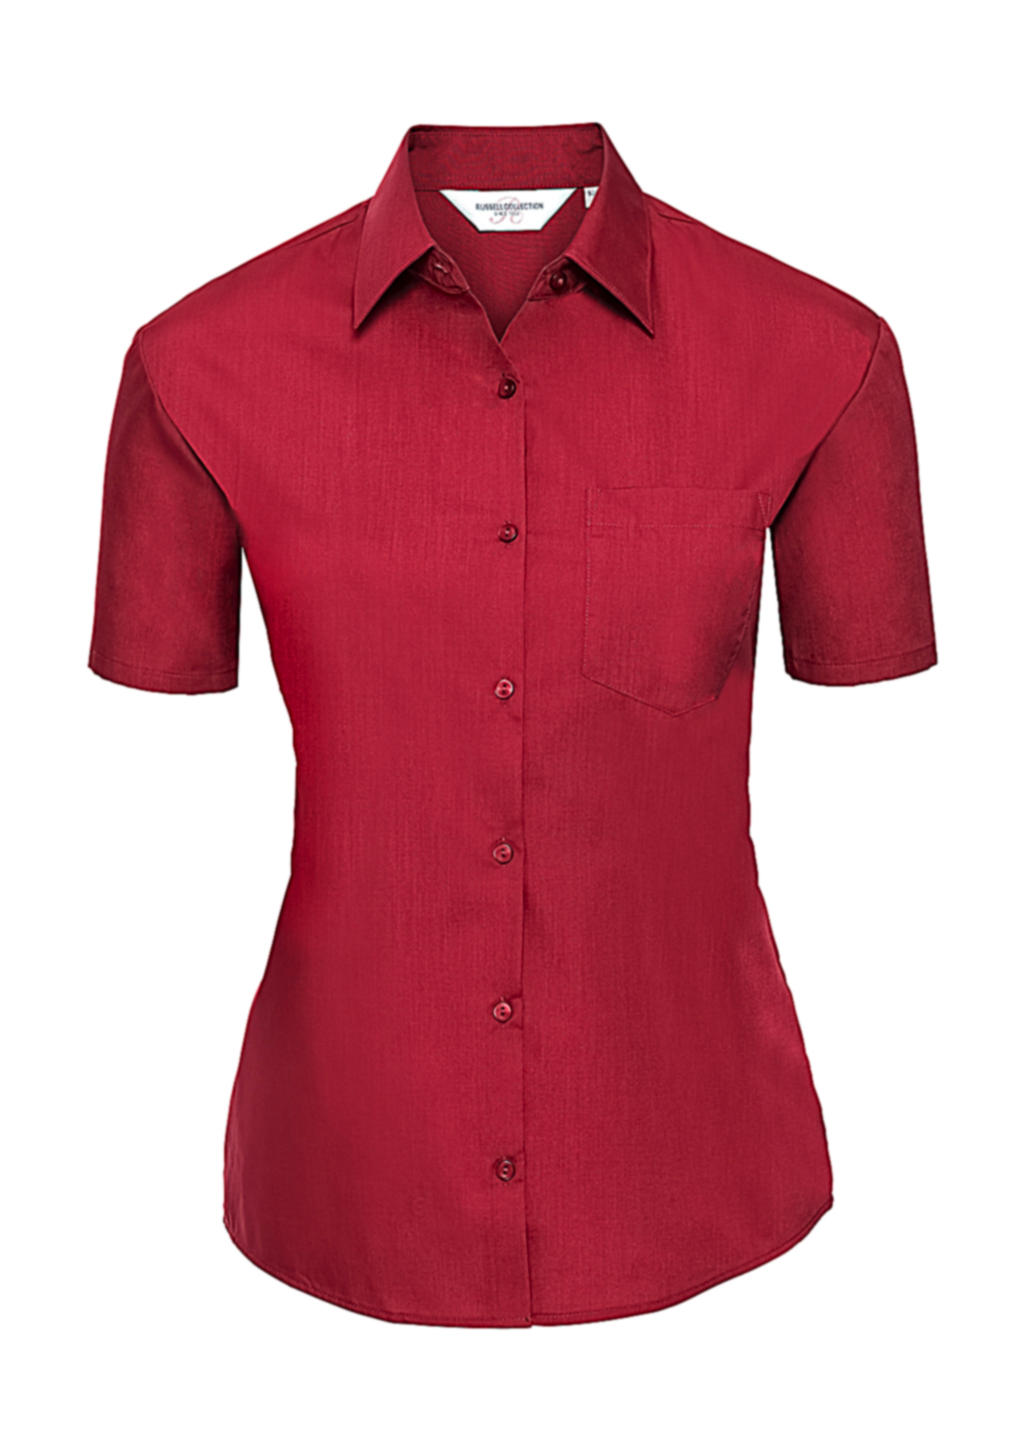  Ladies Poplin Shirt in Farbe Classic Red